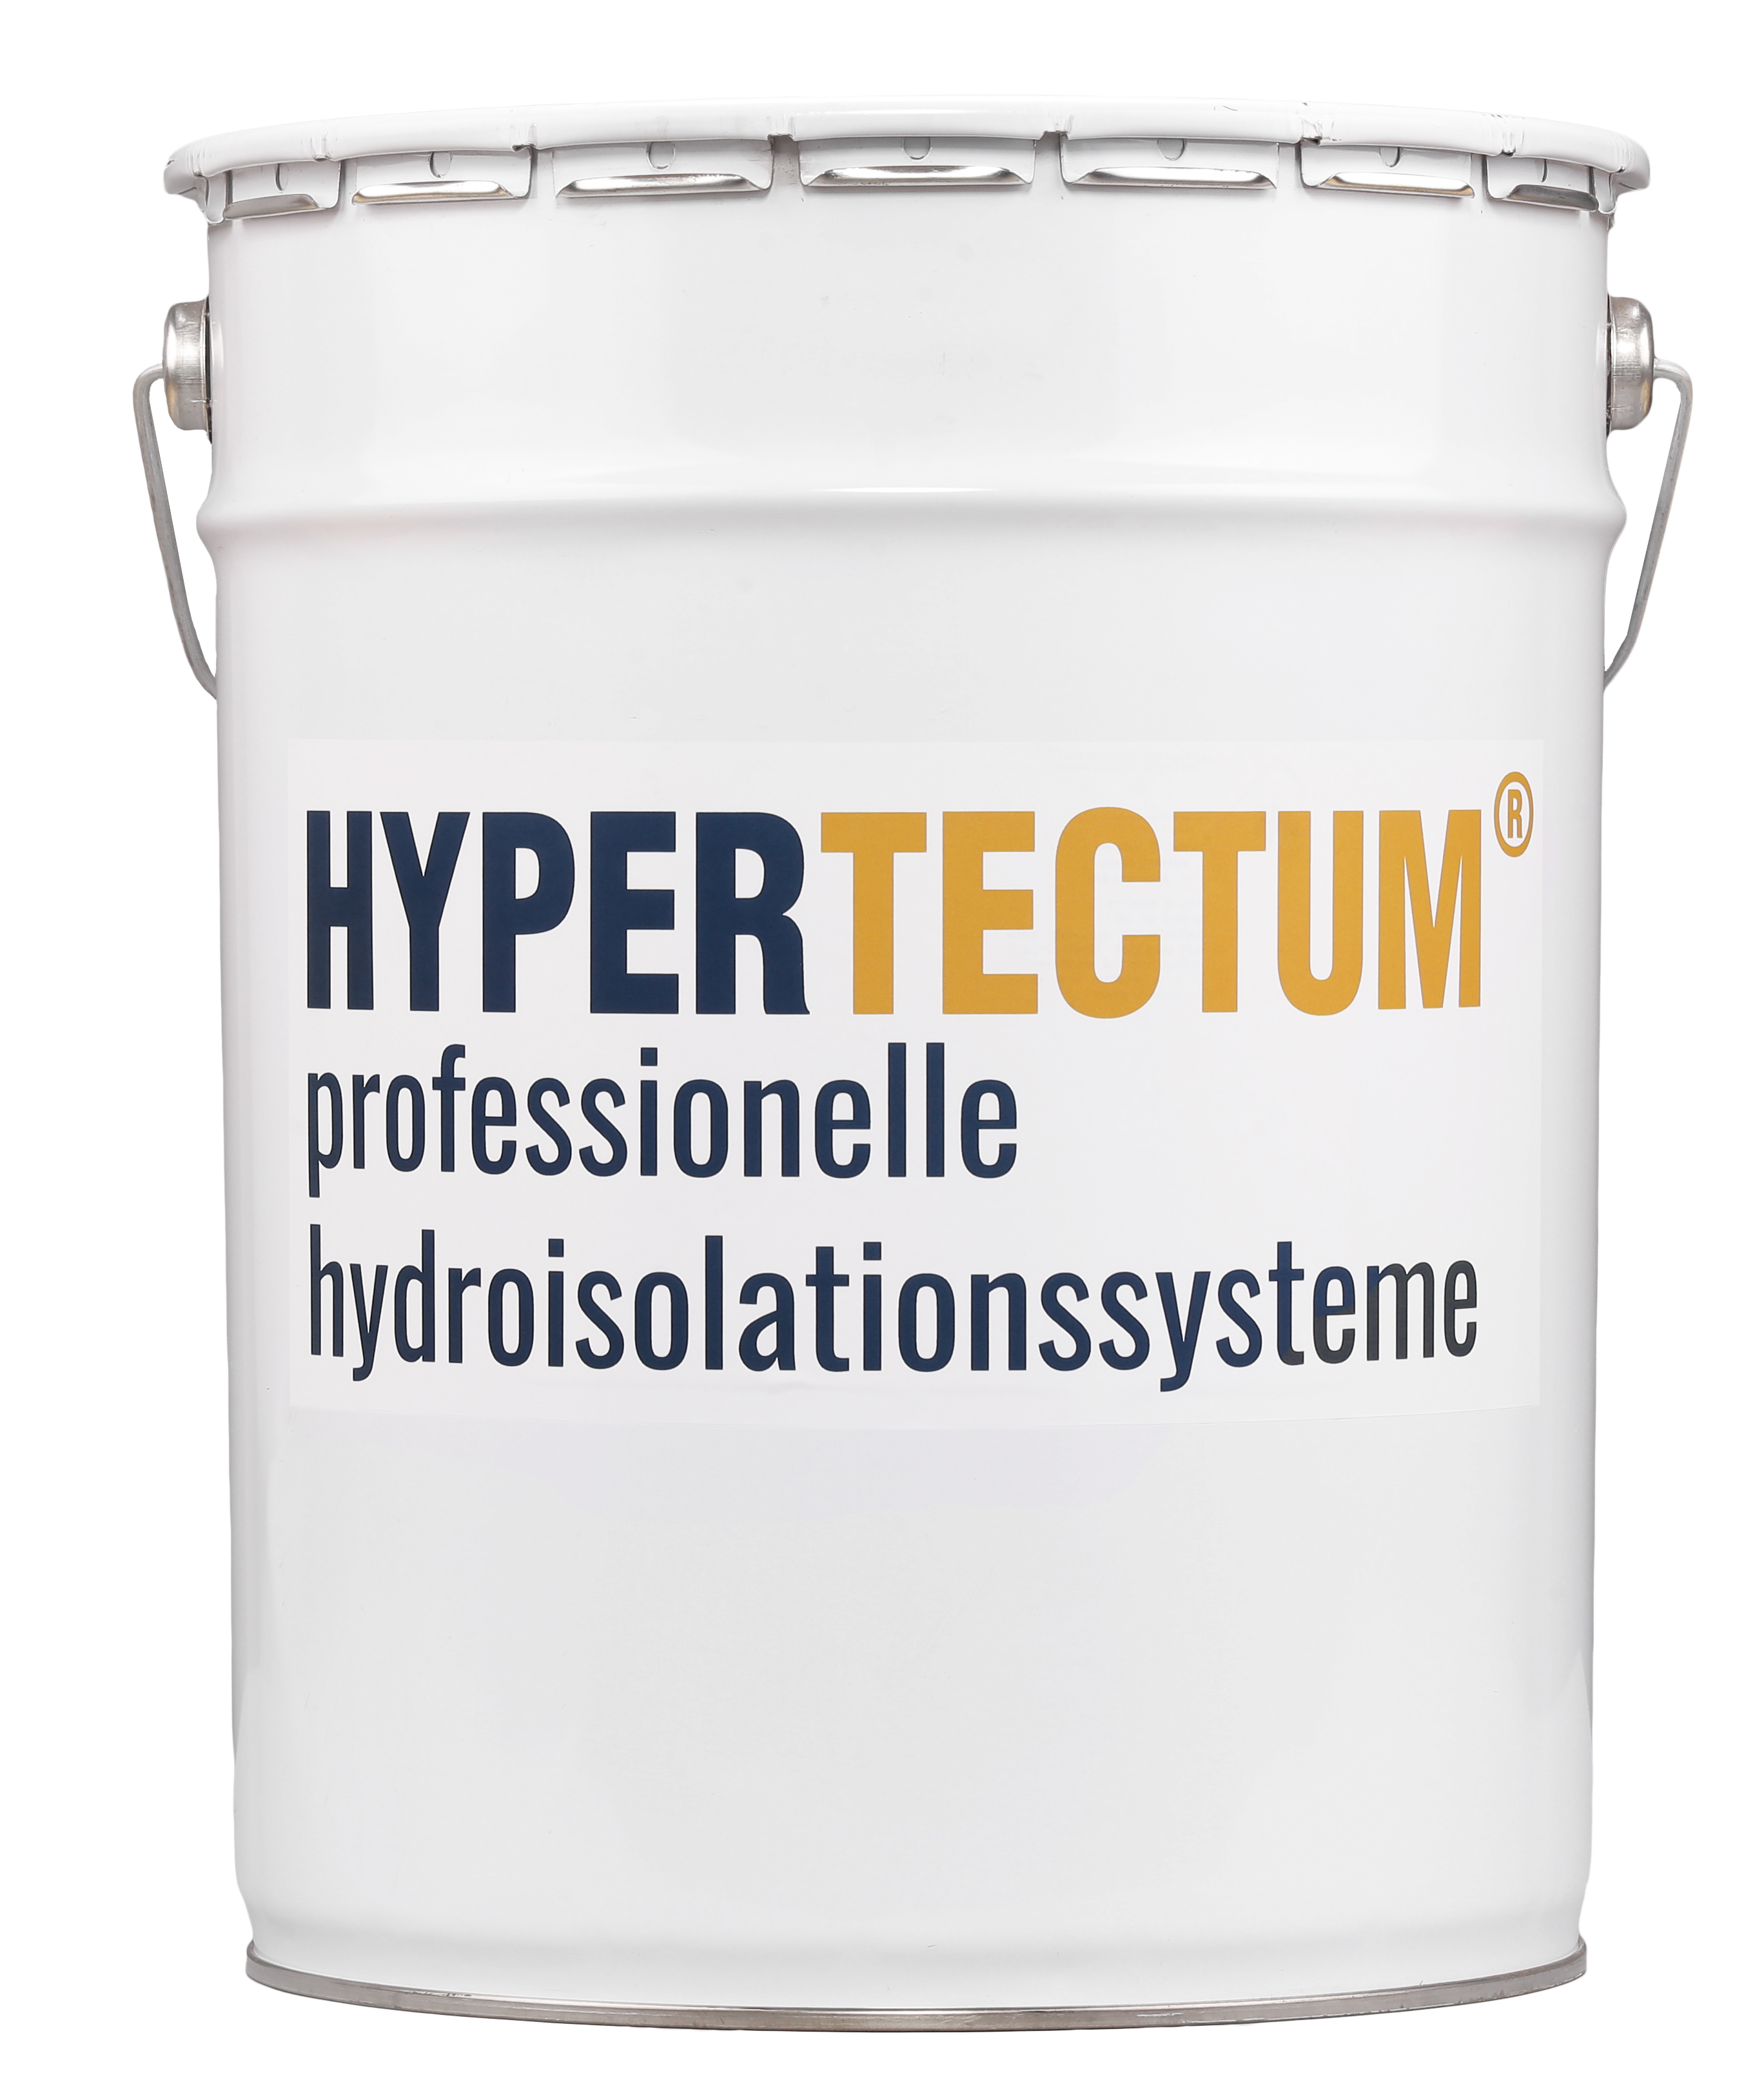 hypertectum professionelle Hydroisolationssysteme